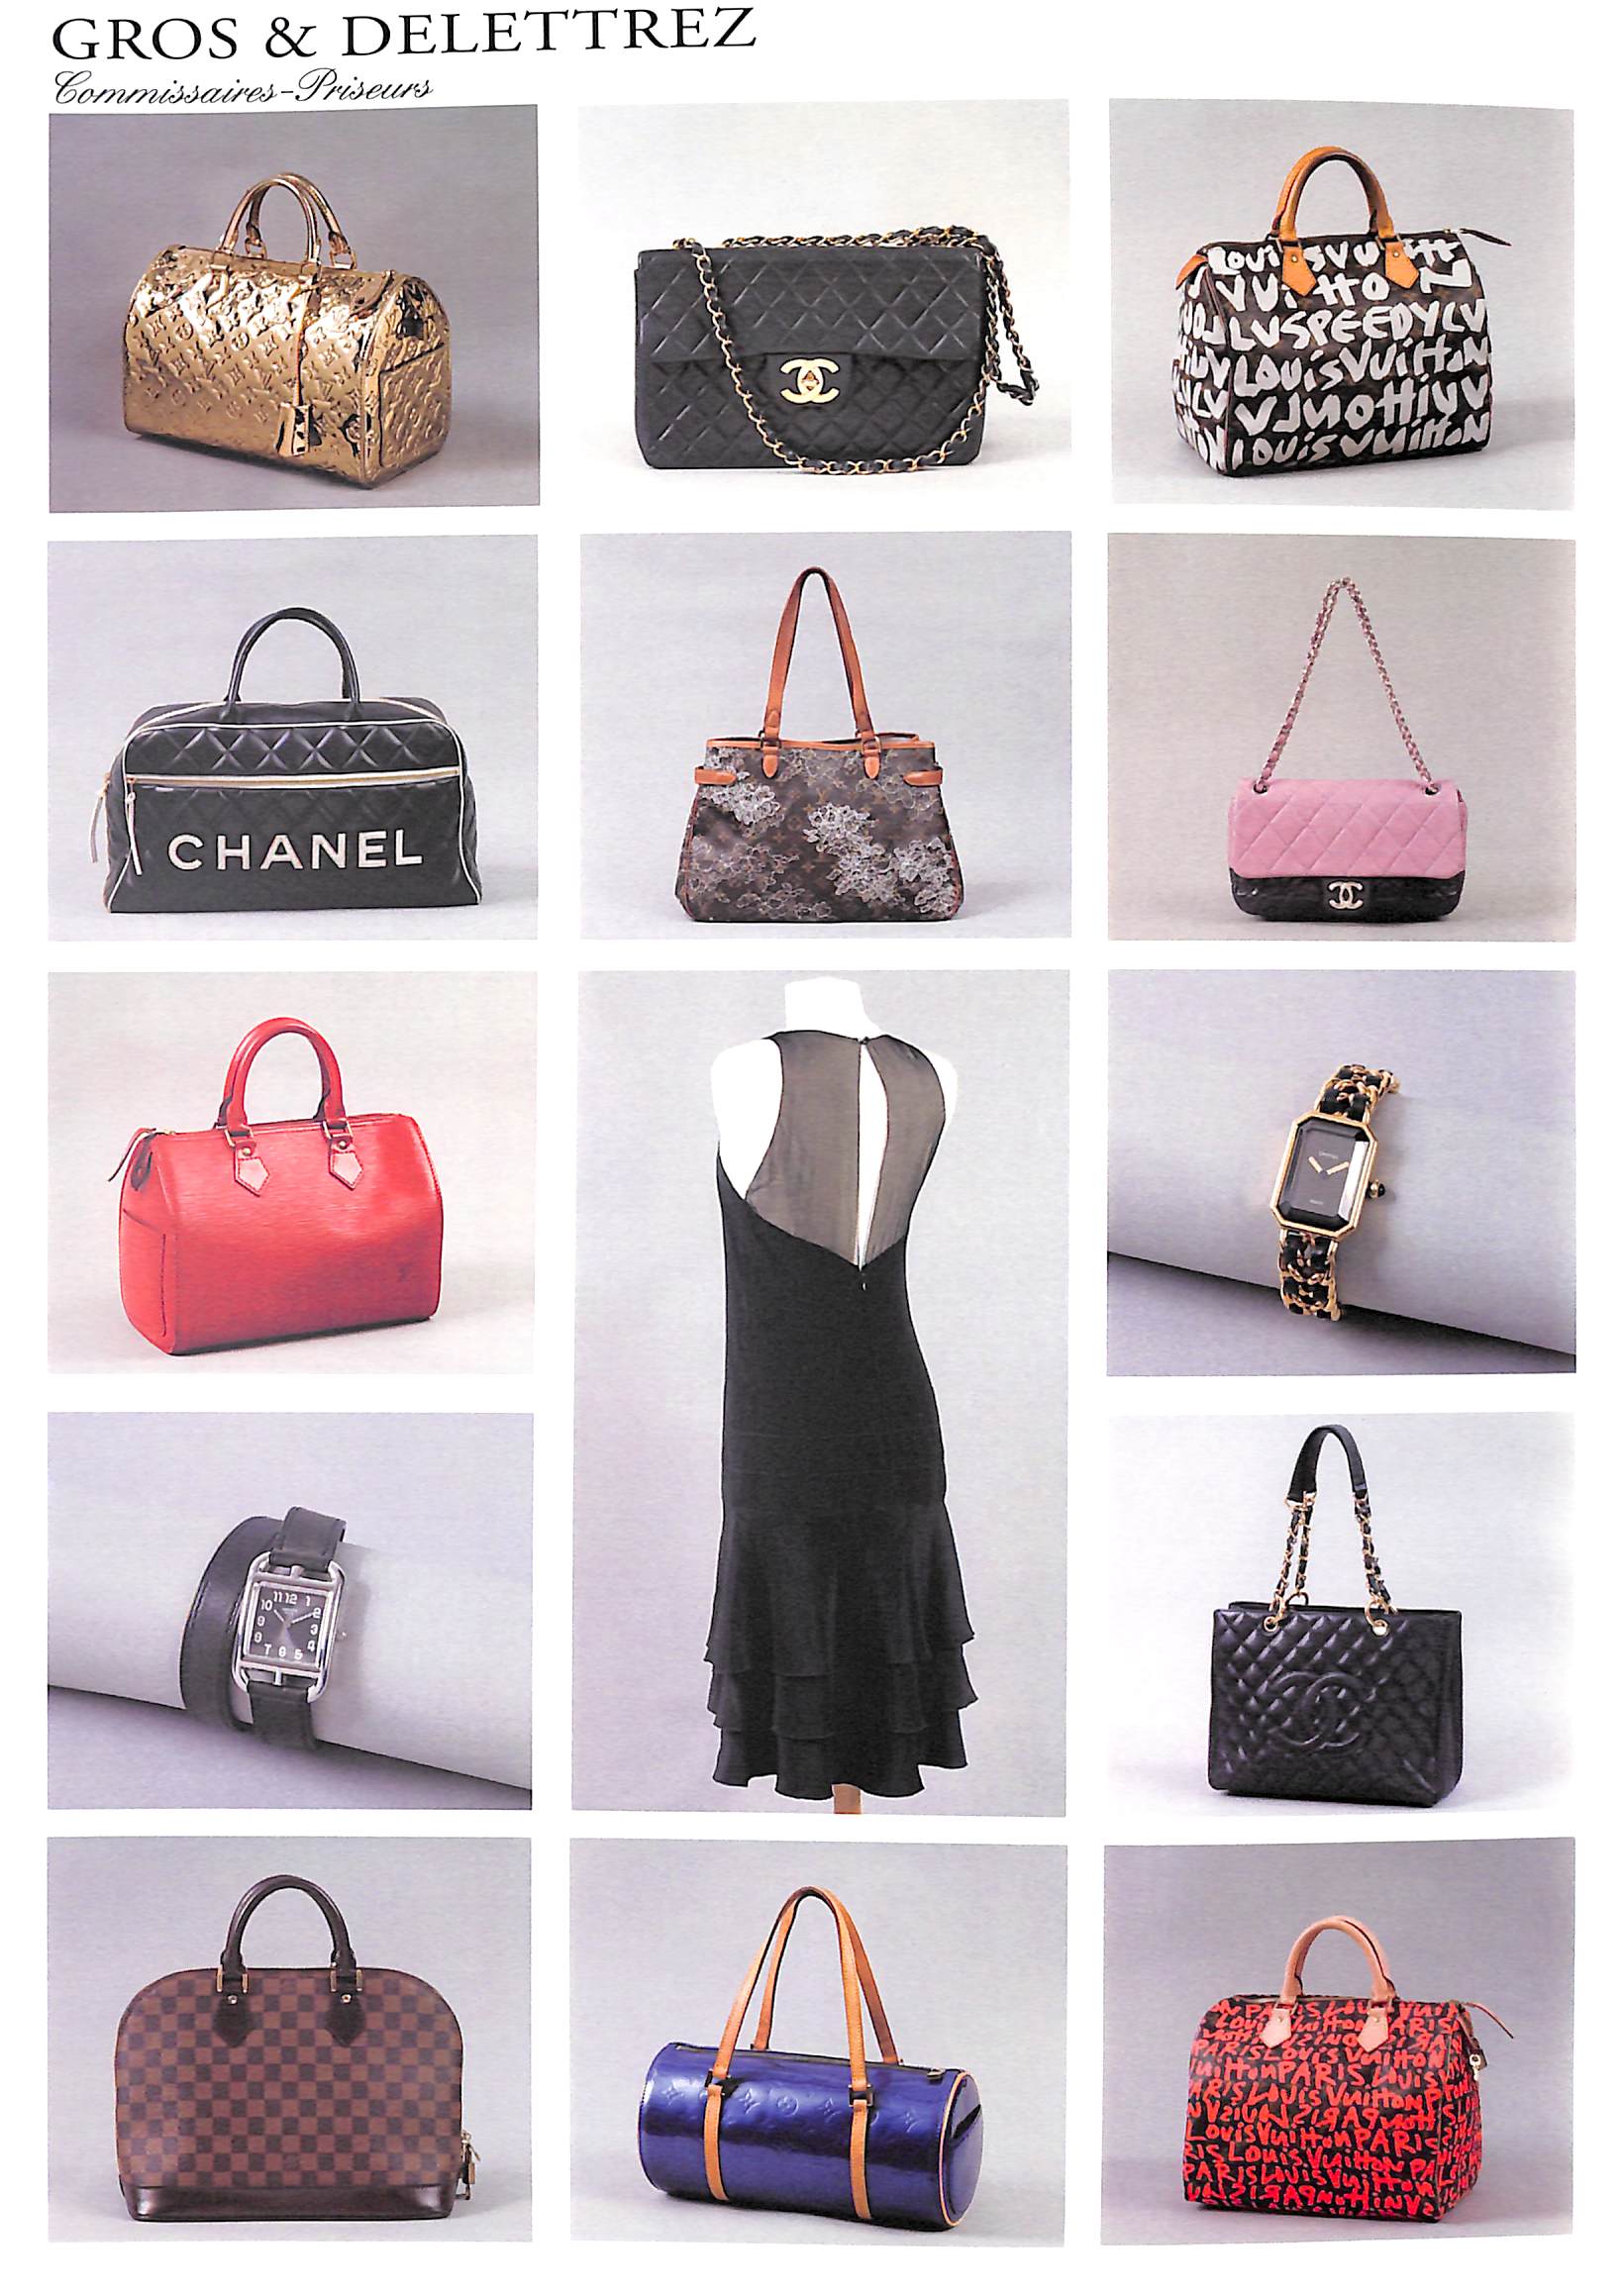 GROS & DELETTREZ Louis Vuitton Fashion Handbags Costume